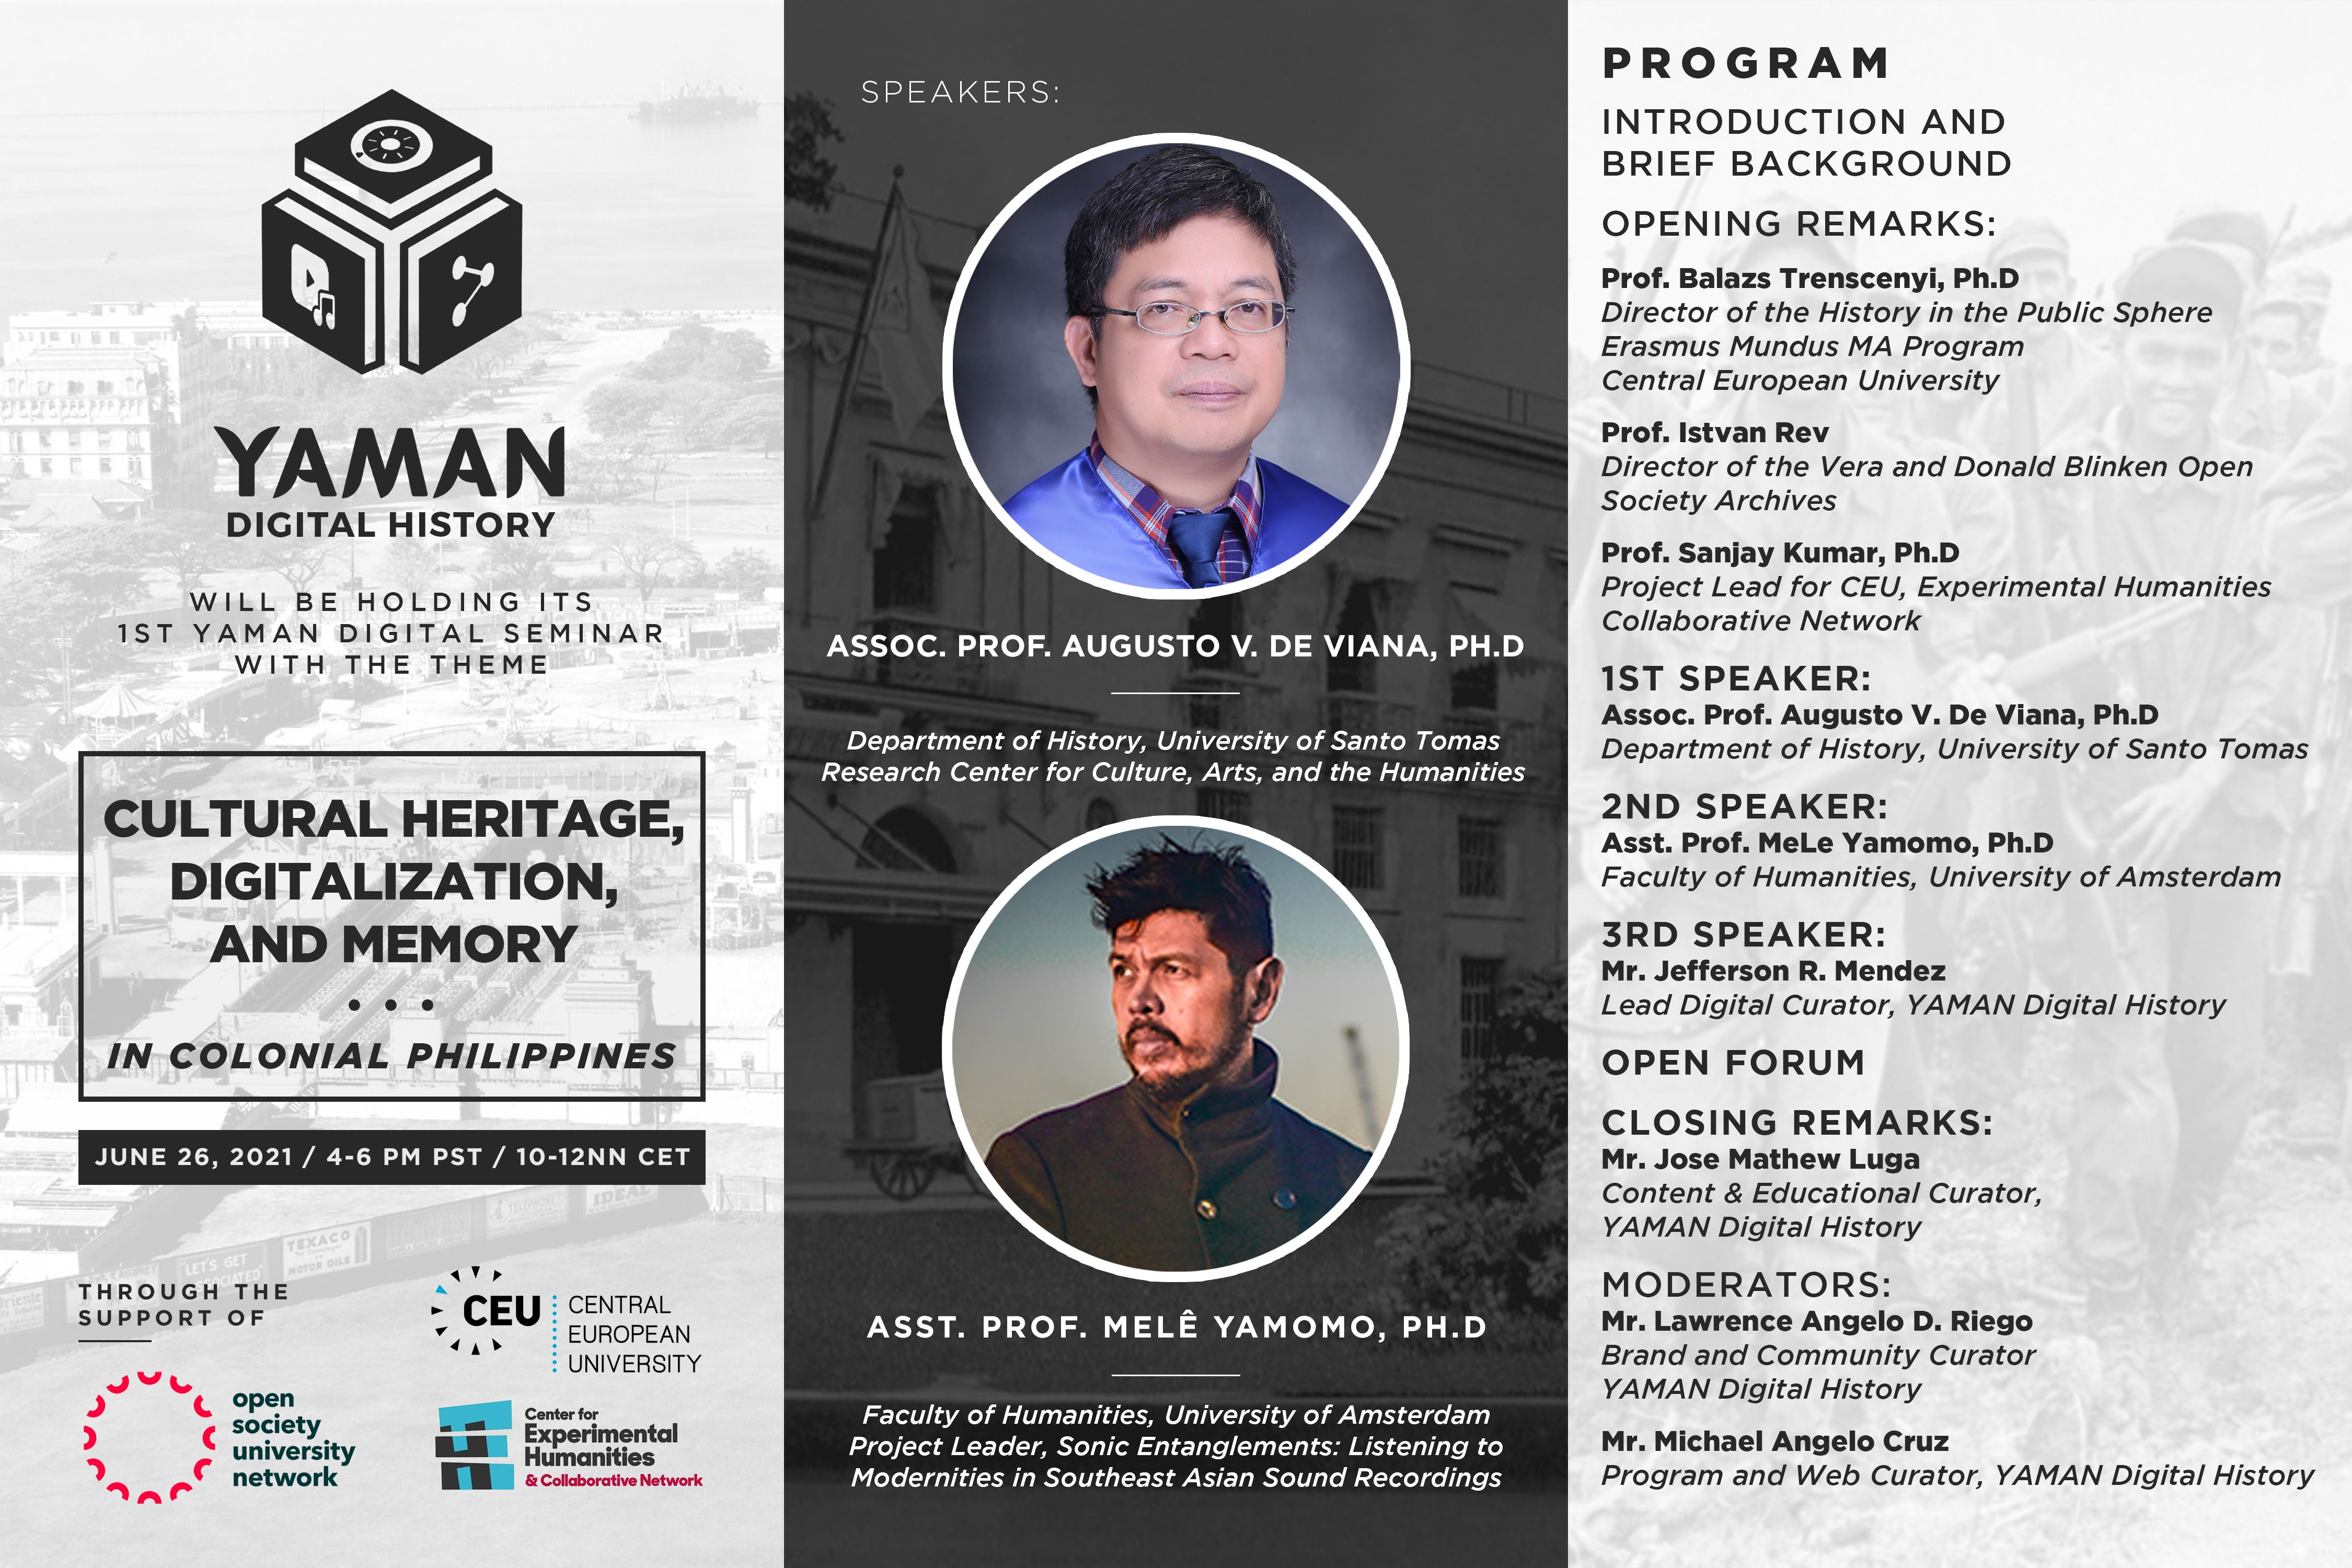 YAMAN Digital History 1st Digital Seminar Poster with Program